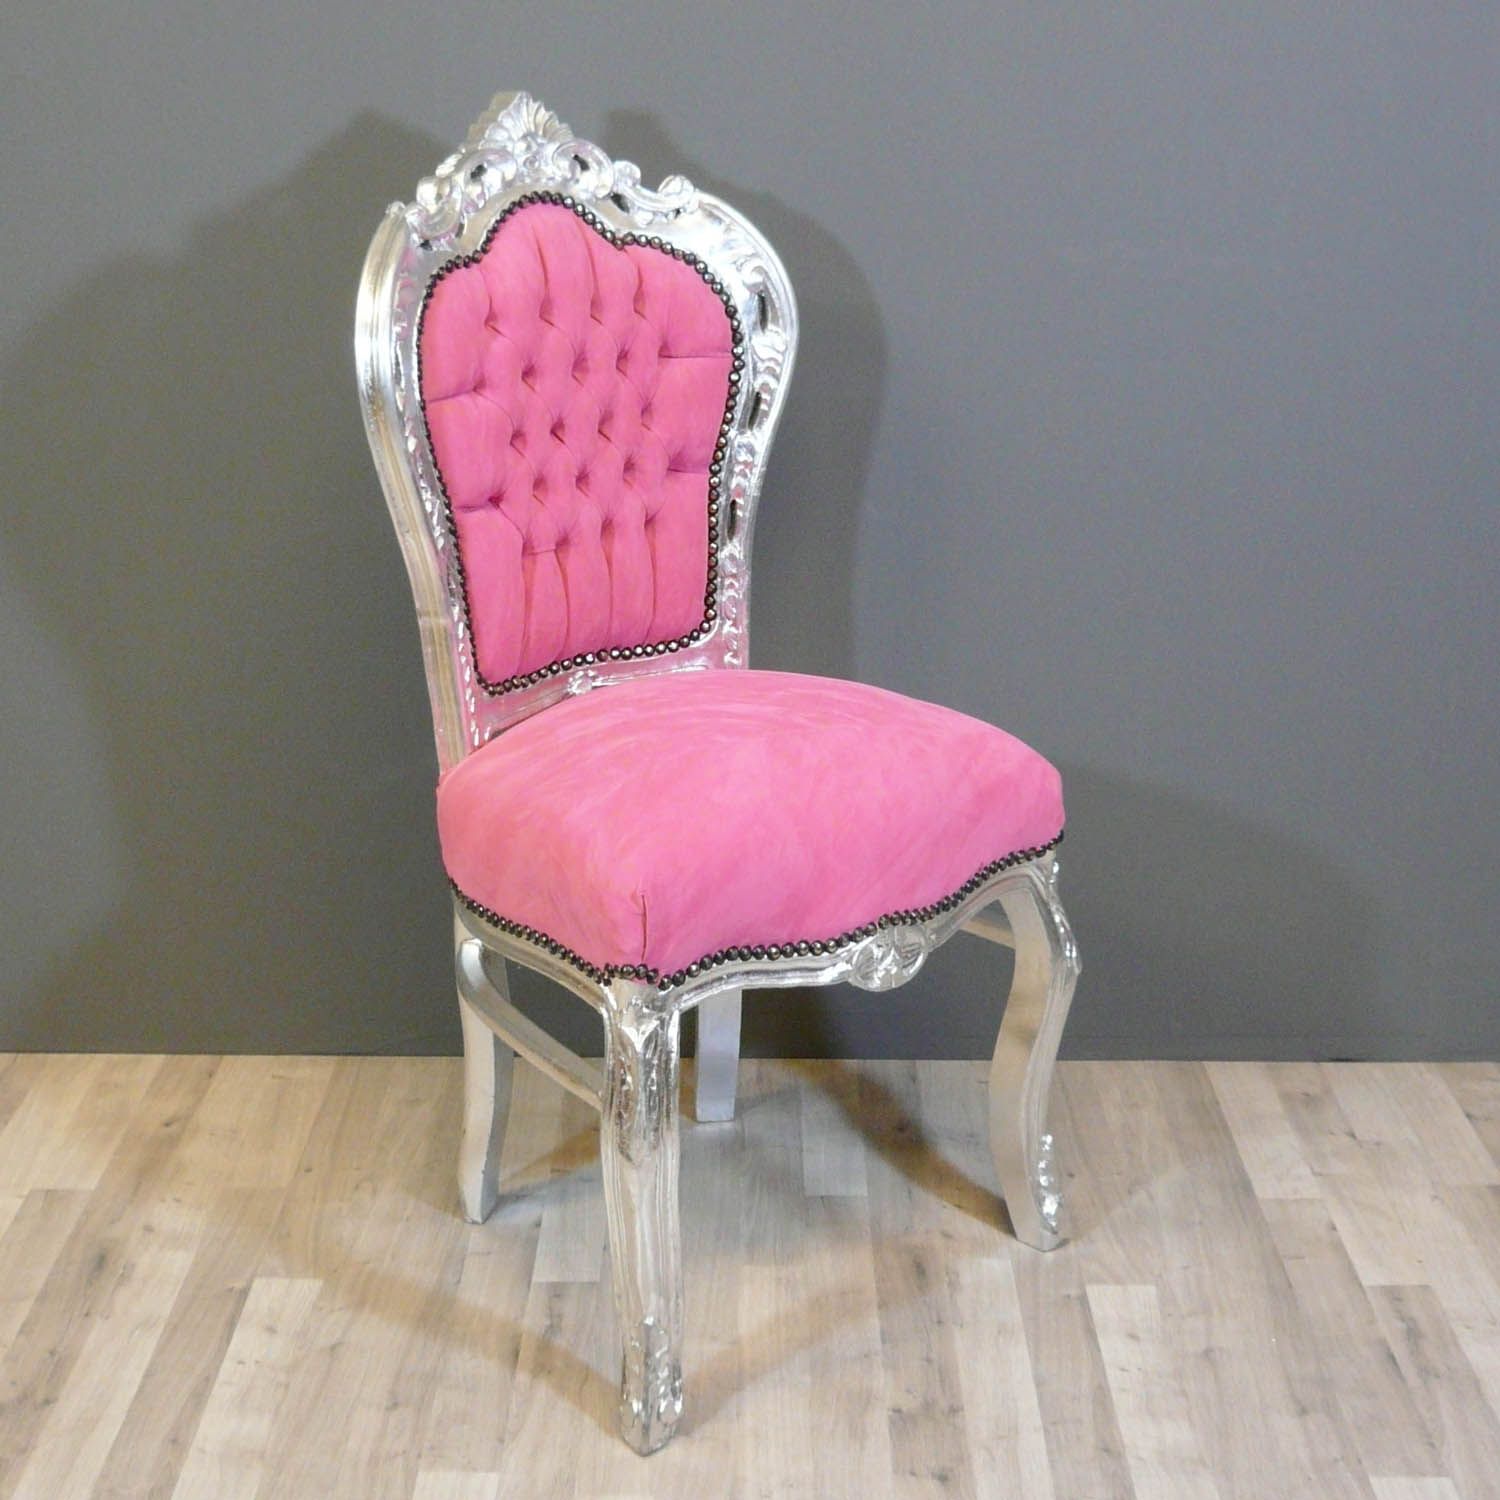 La musiquita y mi silla rosa